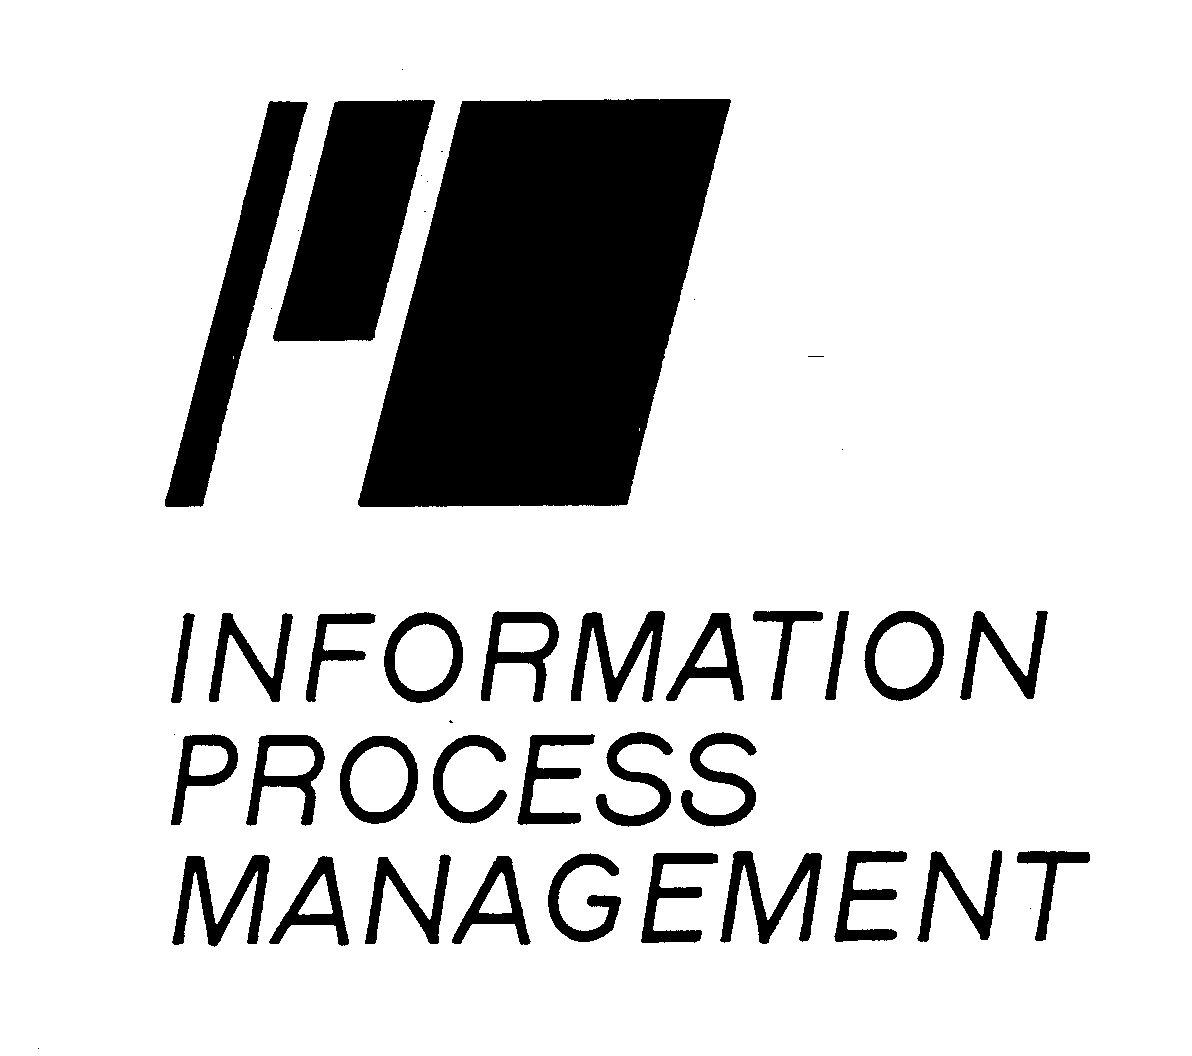  IPM INFORMATION PROCESS MANAGEMENT